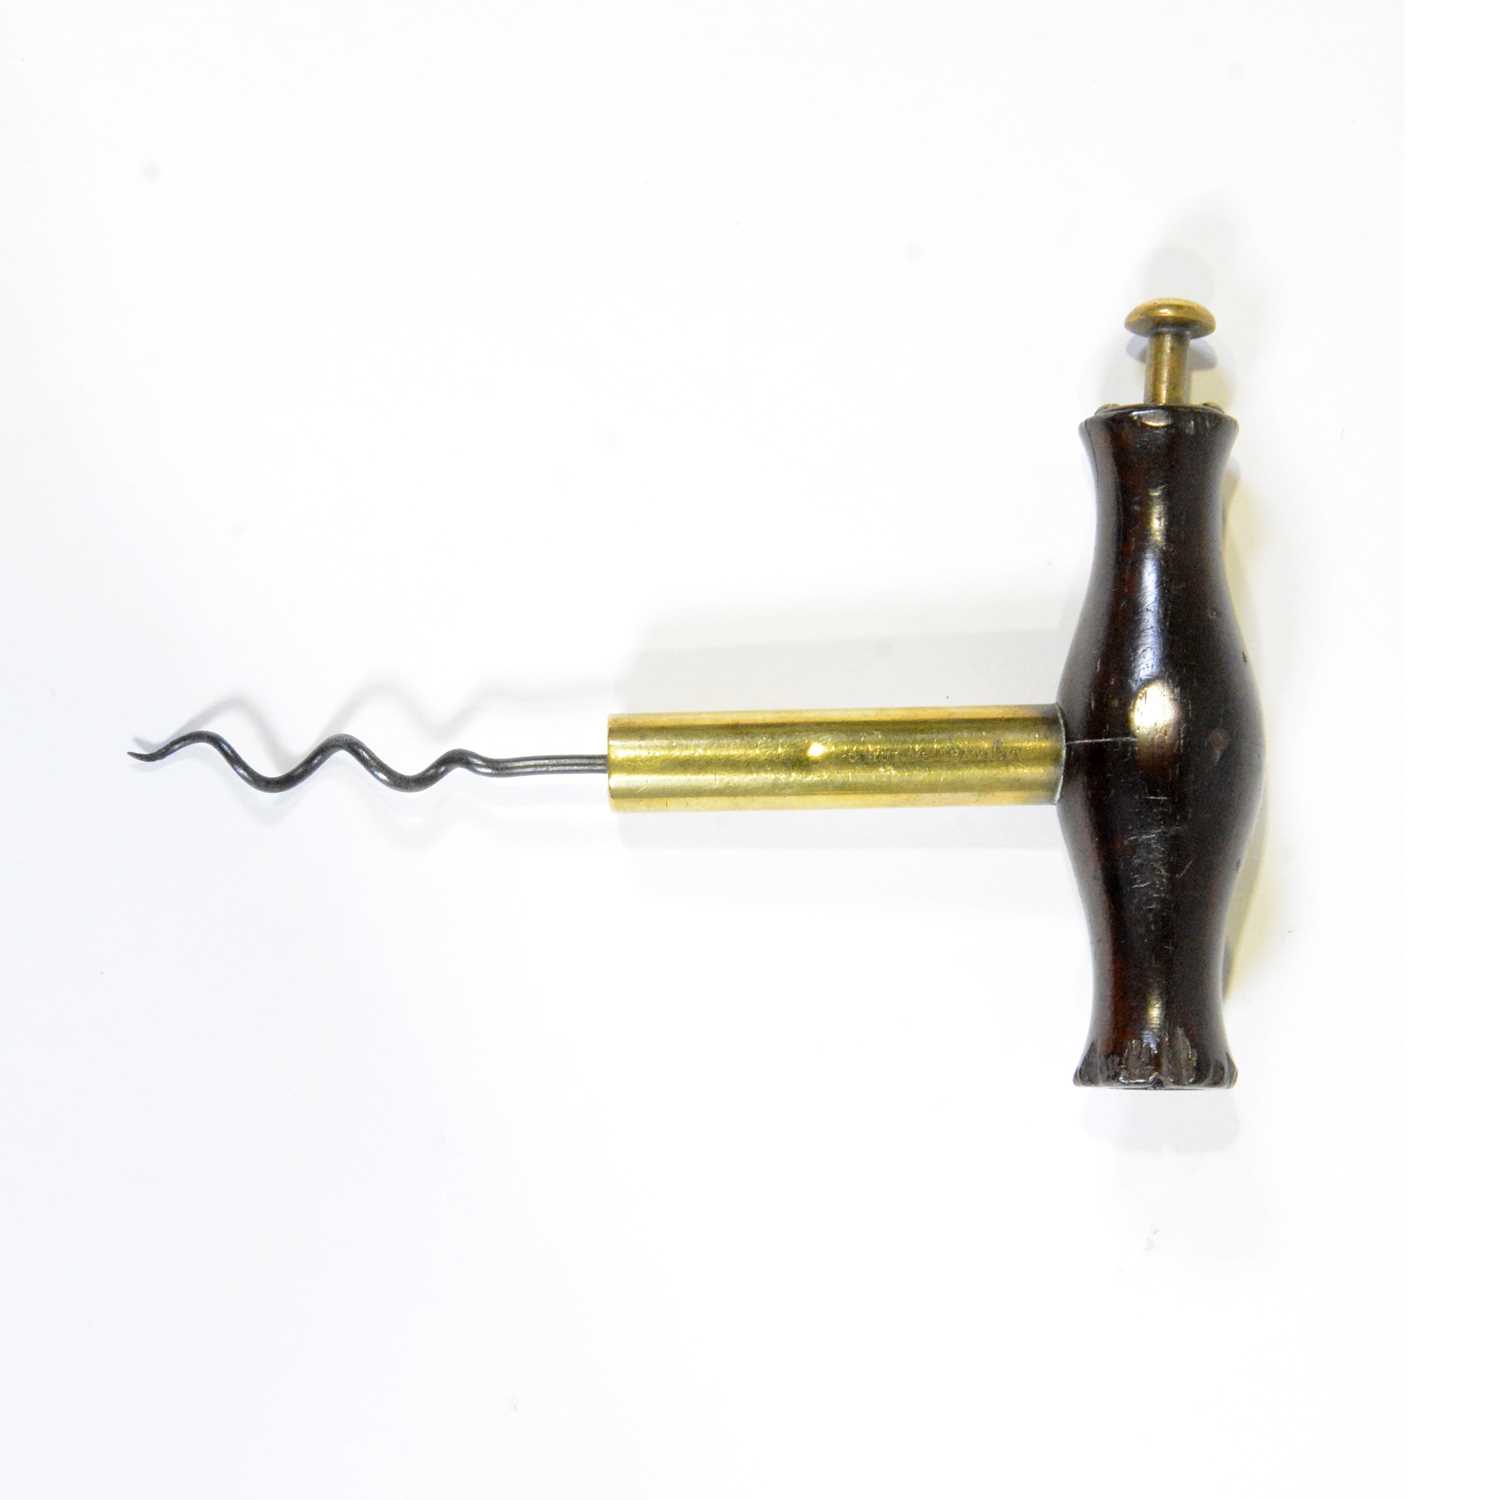 Lot 14 - Charles Hull Patent Presto corkscrew